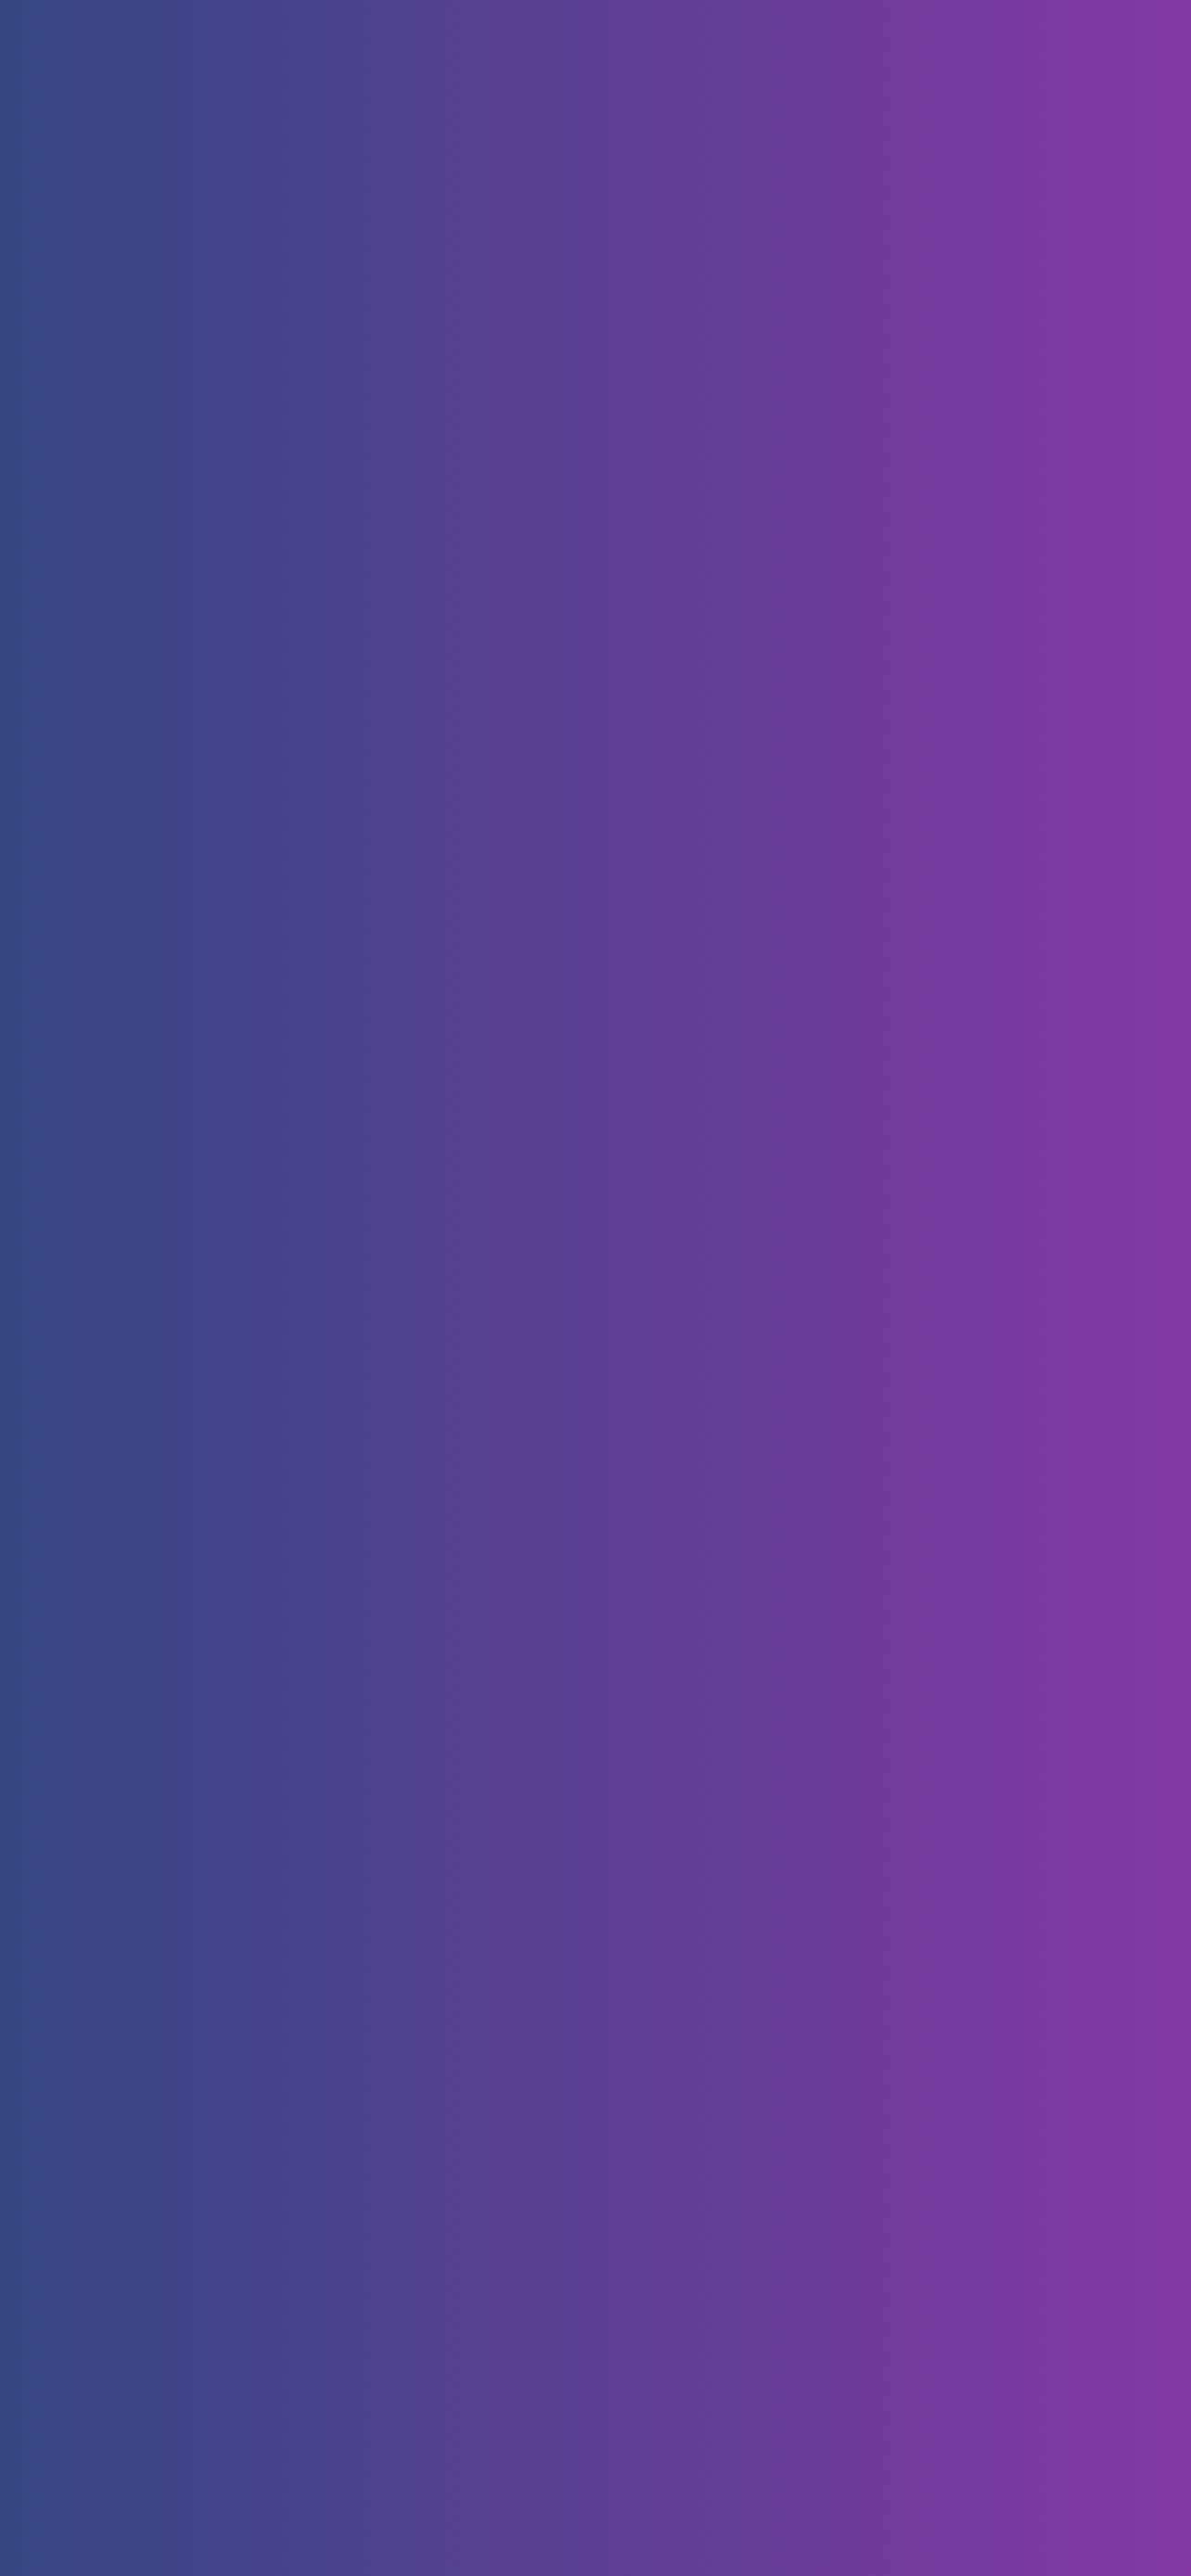 macOS gradient wallpaper by AR7 idownloadblog blue to purple